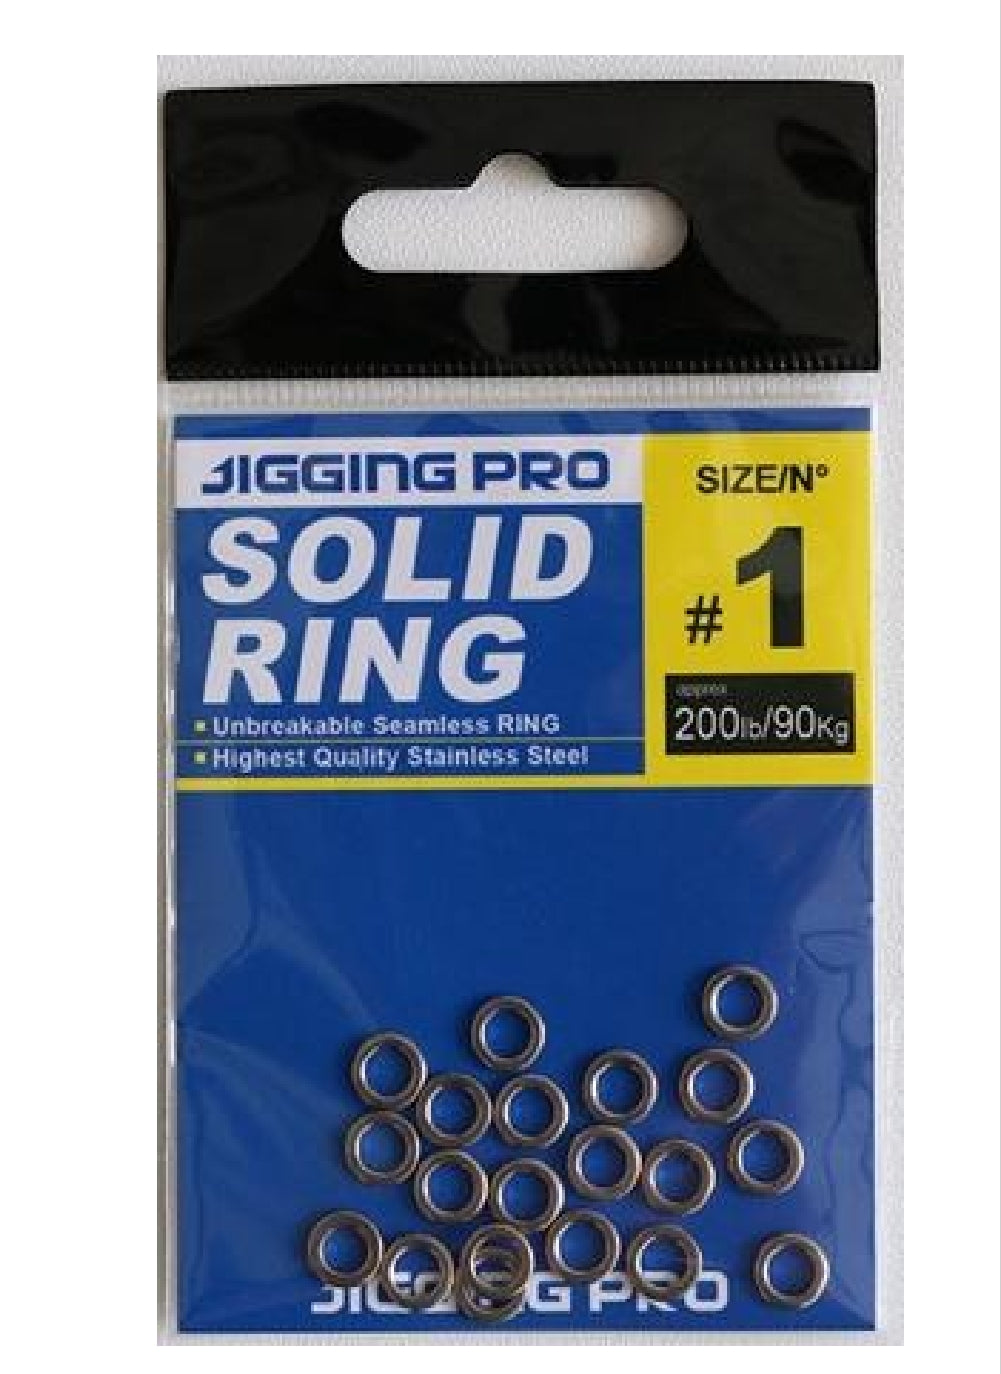 Jigging Pro - Solid ring